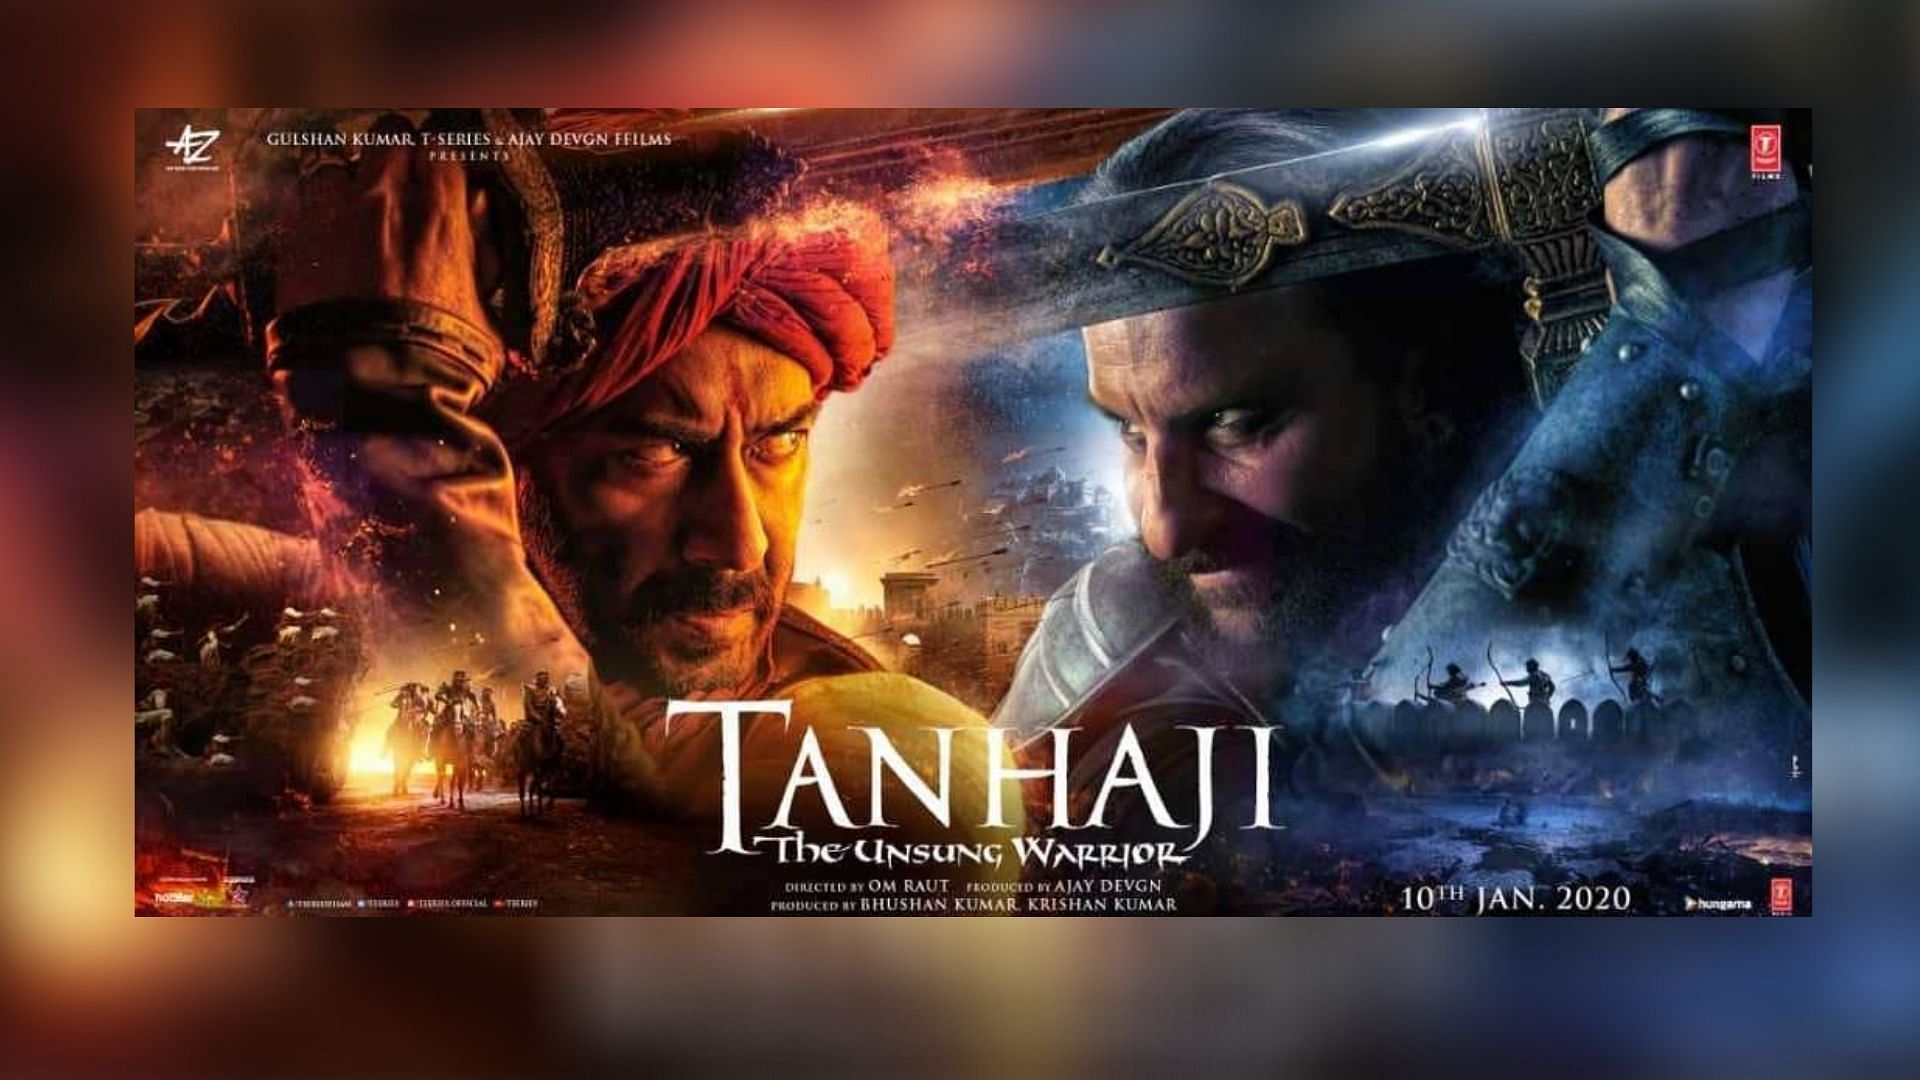 Saif Ali Khan and Ajay Devgn in the poster from <i>Tanhaji</i>.